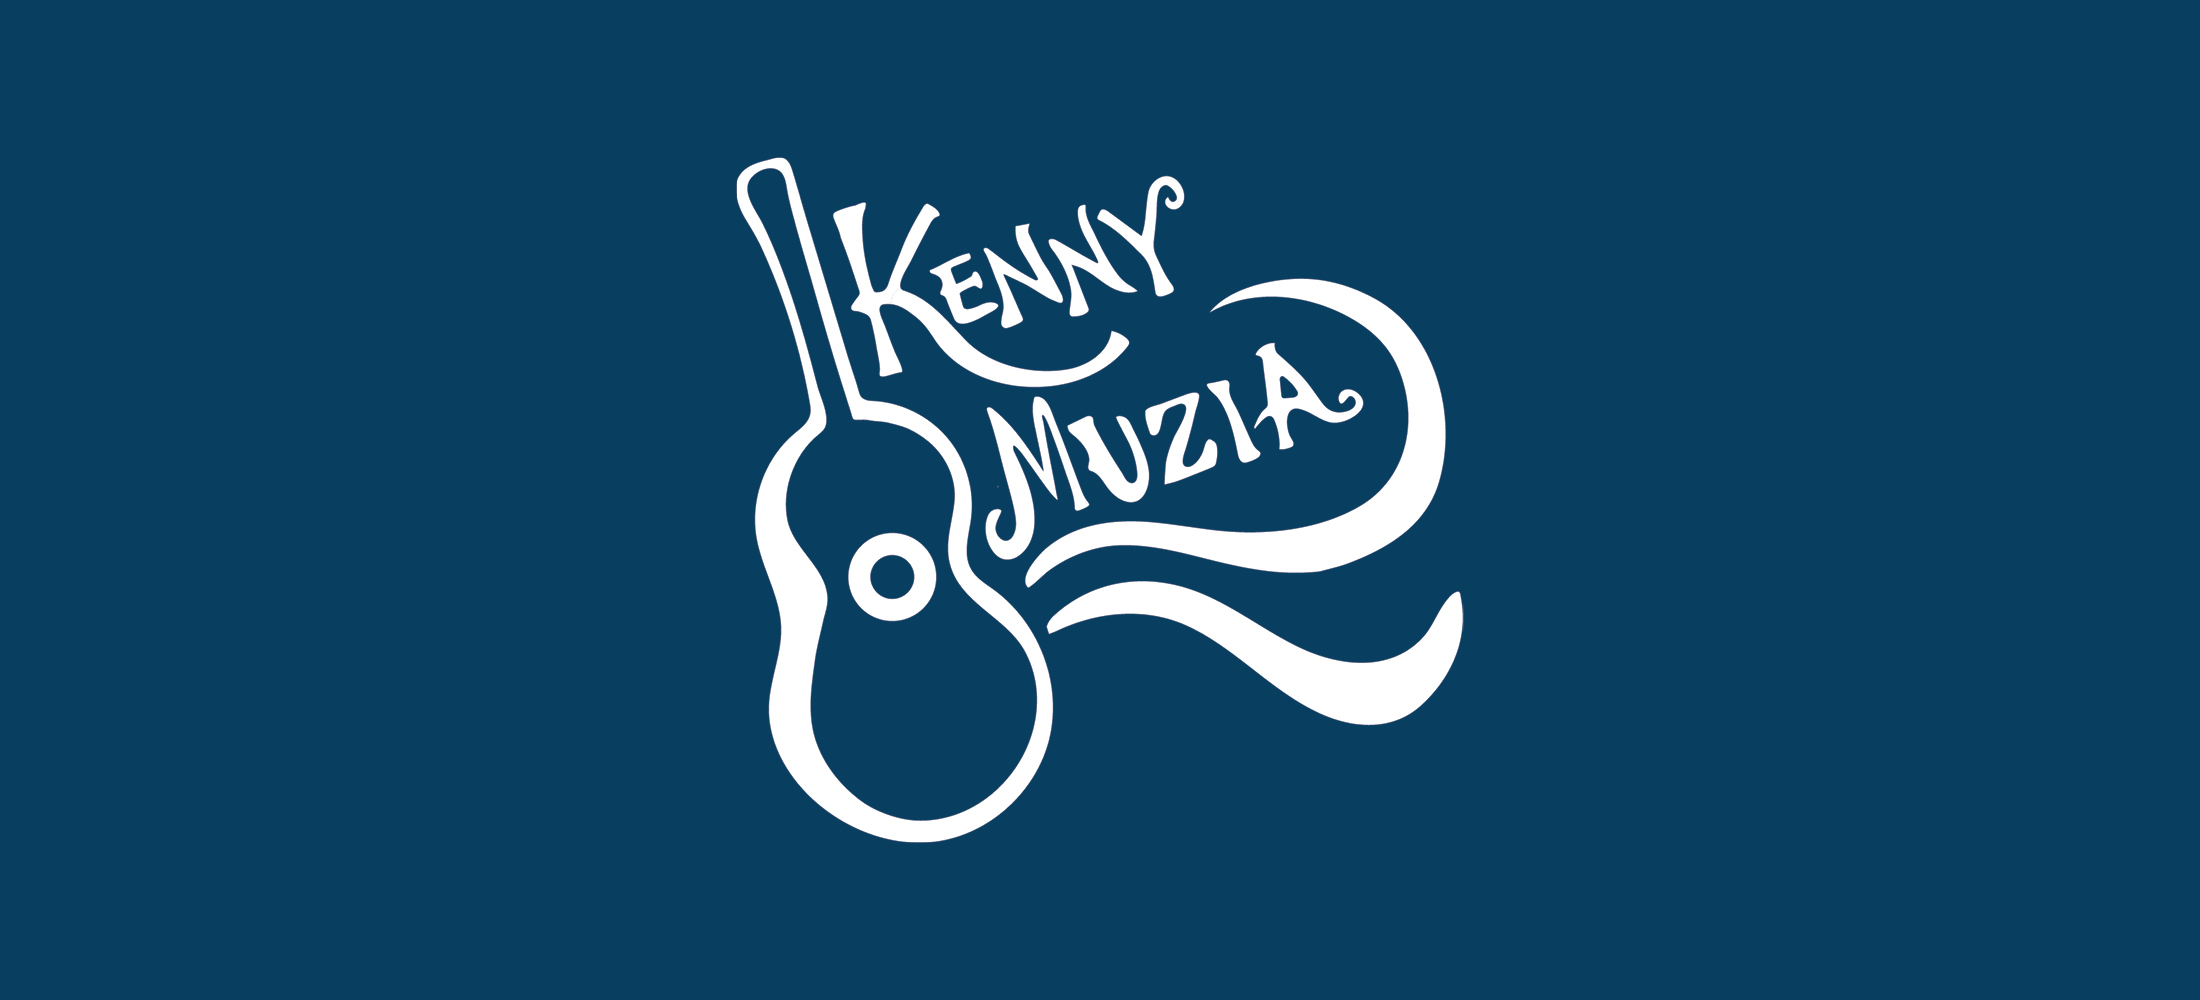 Kenny Muzia Branding 1